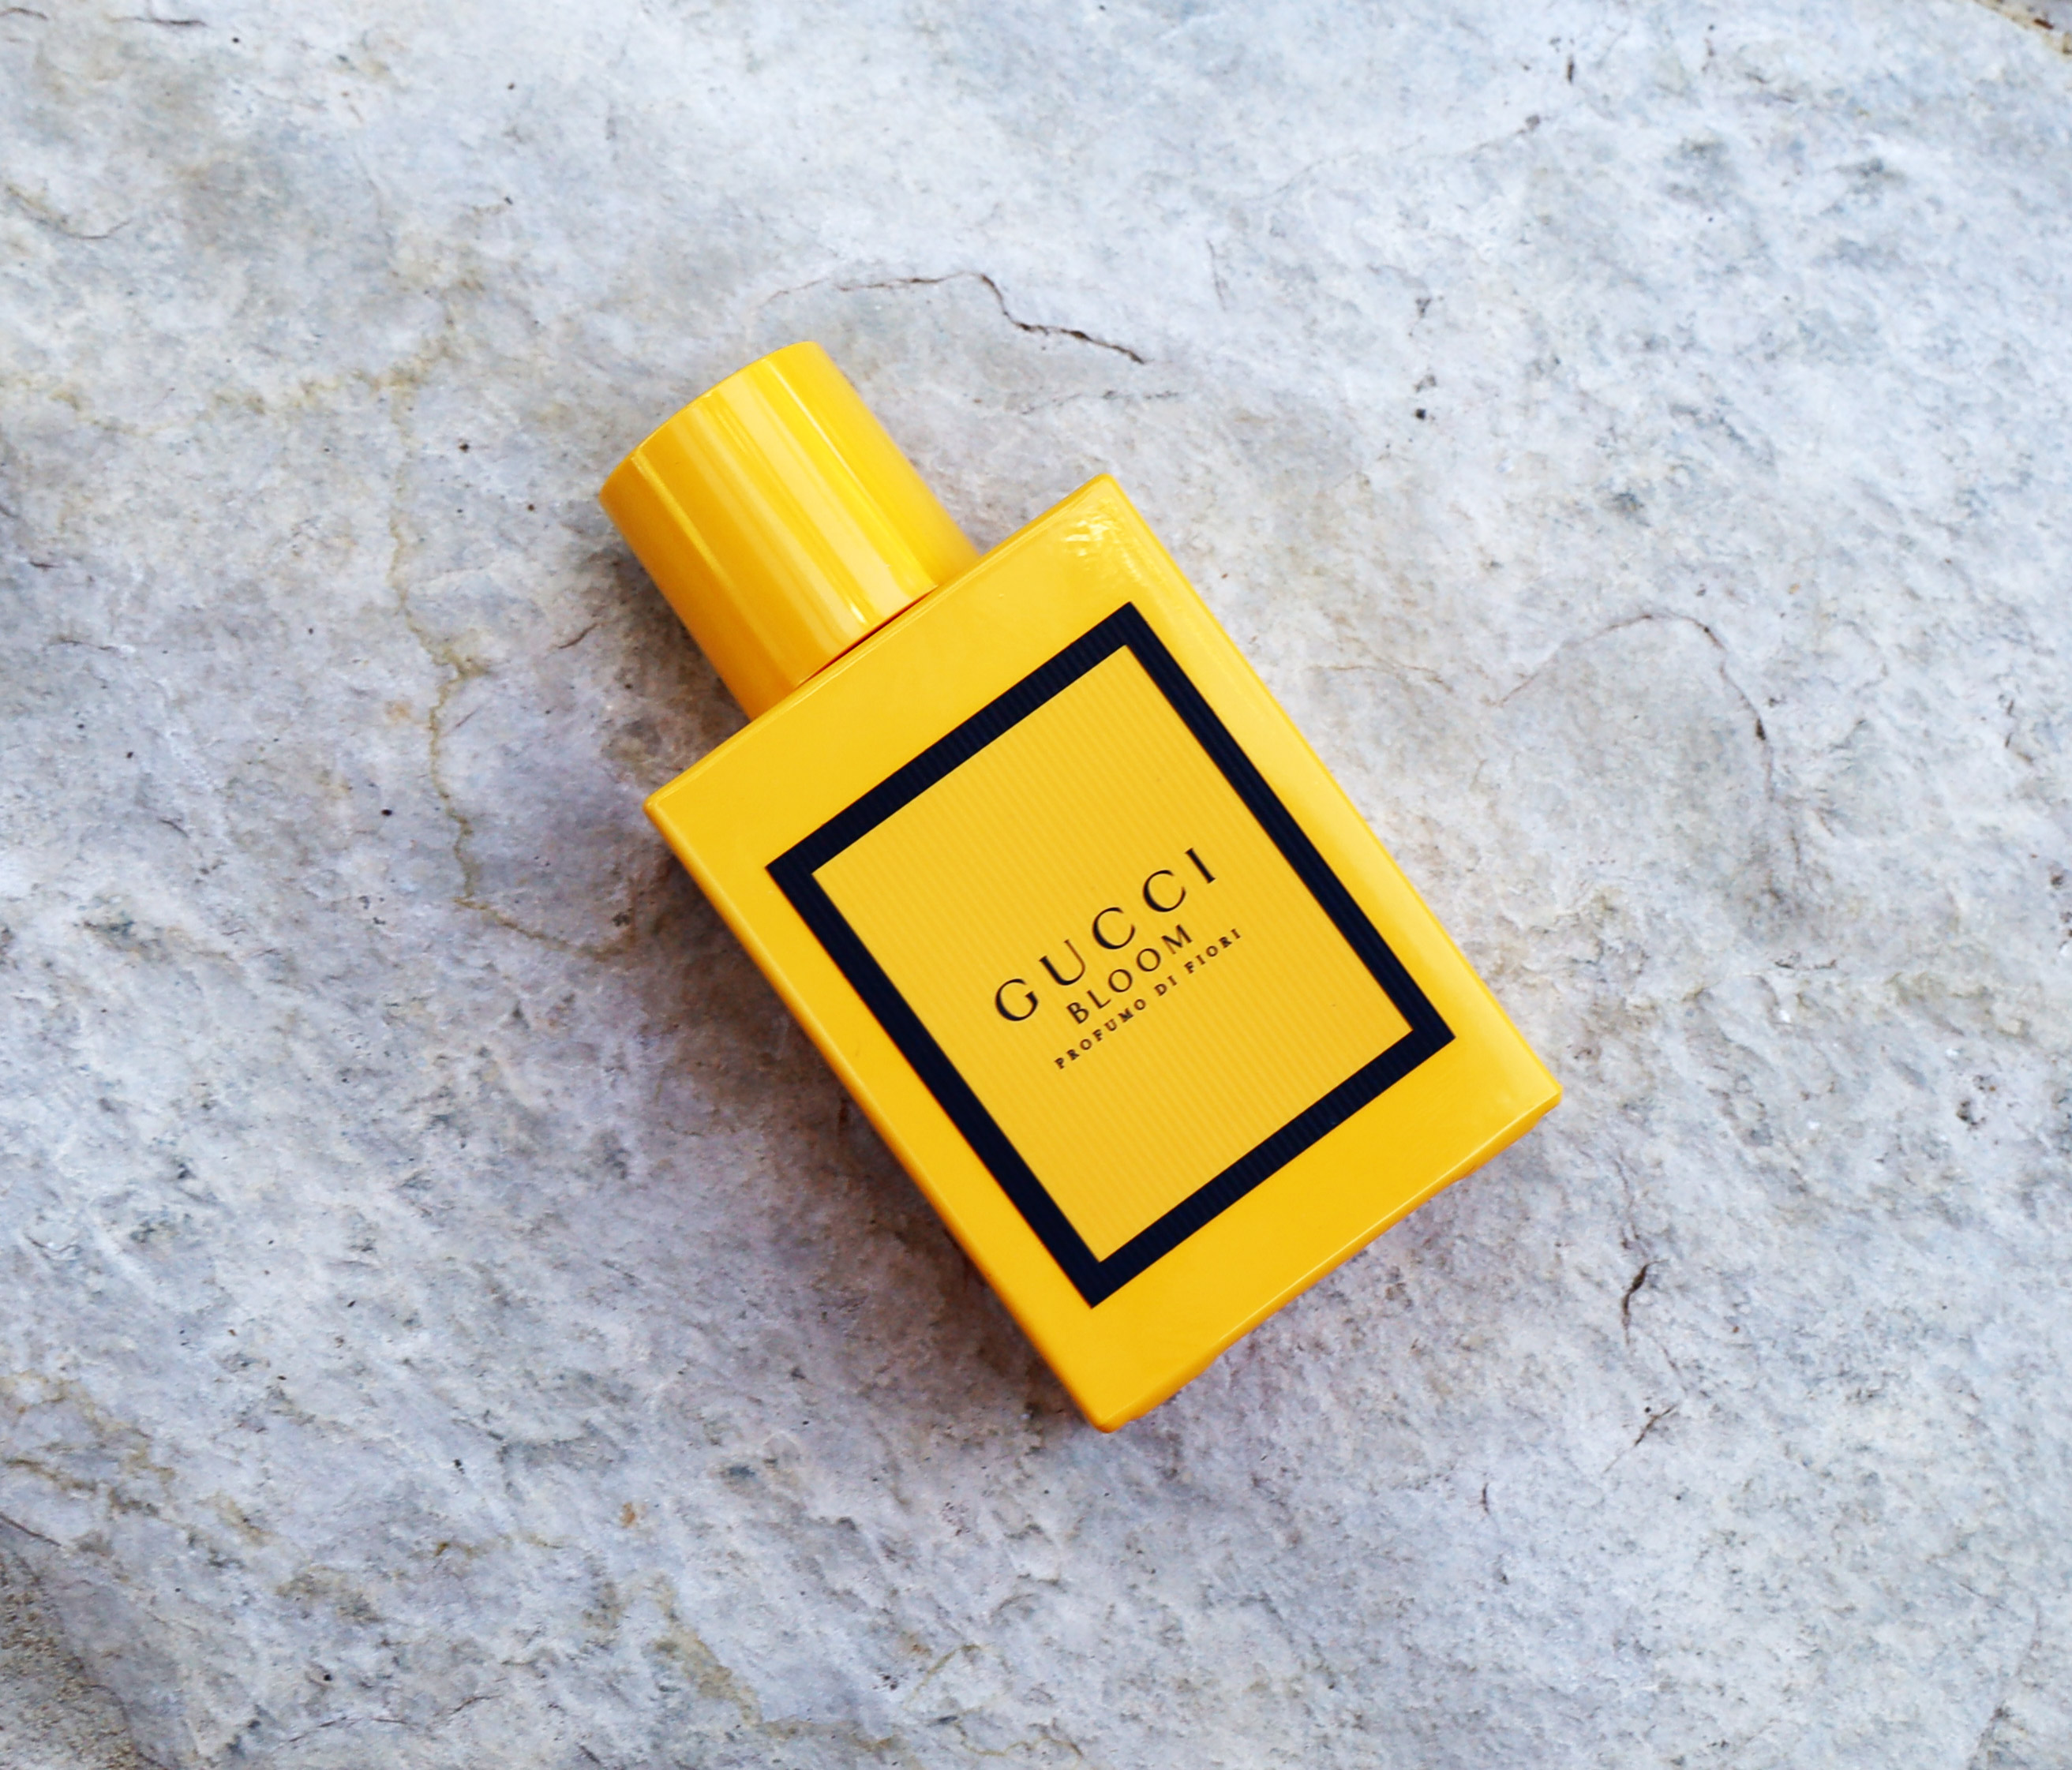 gucci yellow perfume